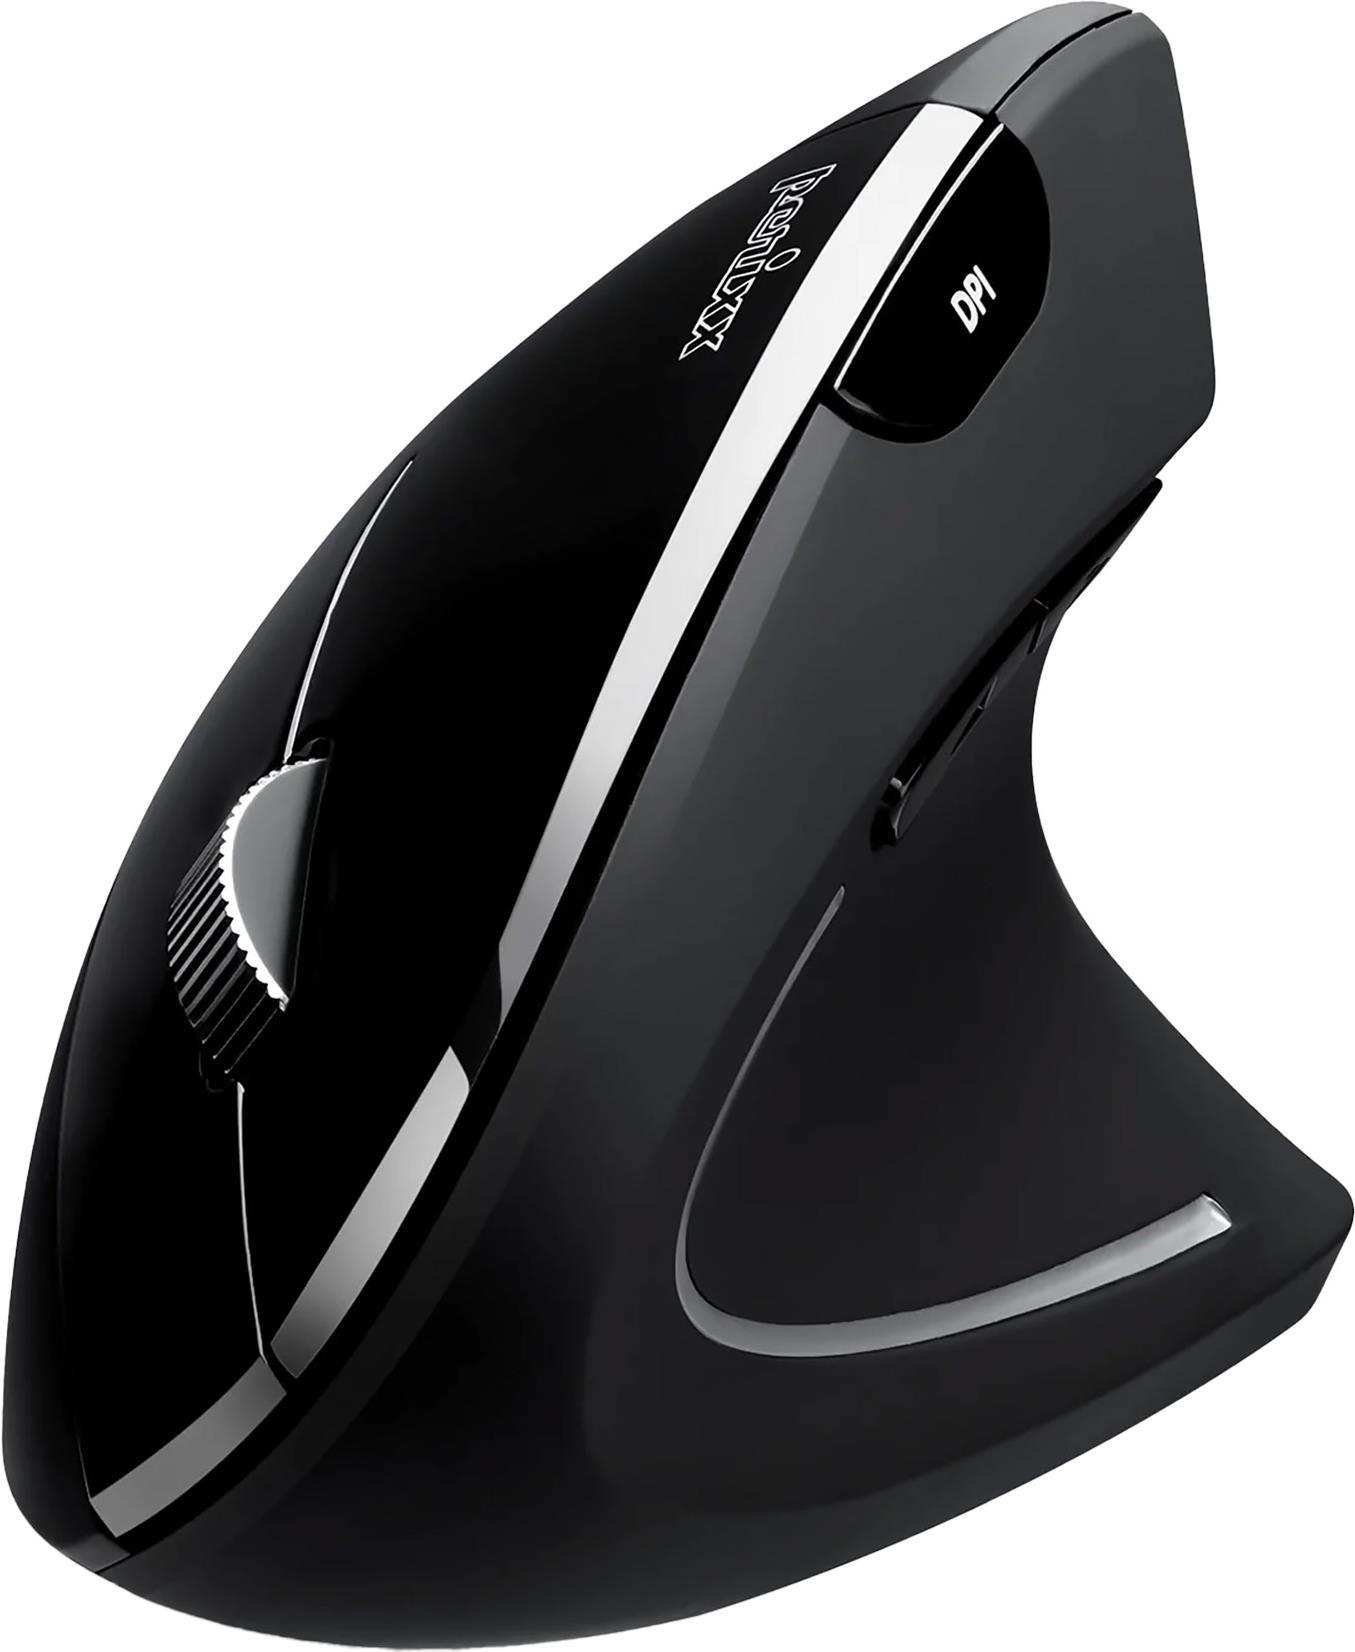 Perixx PERIMICE-813, ergonomische Multi-Device Maus, schnurlos, schwarz (PERIMICE-813)